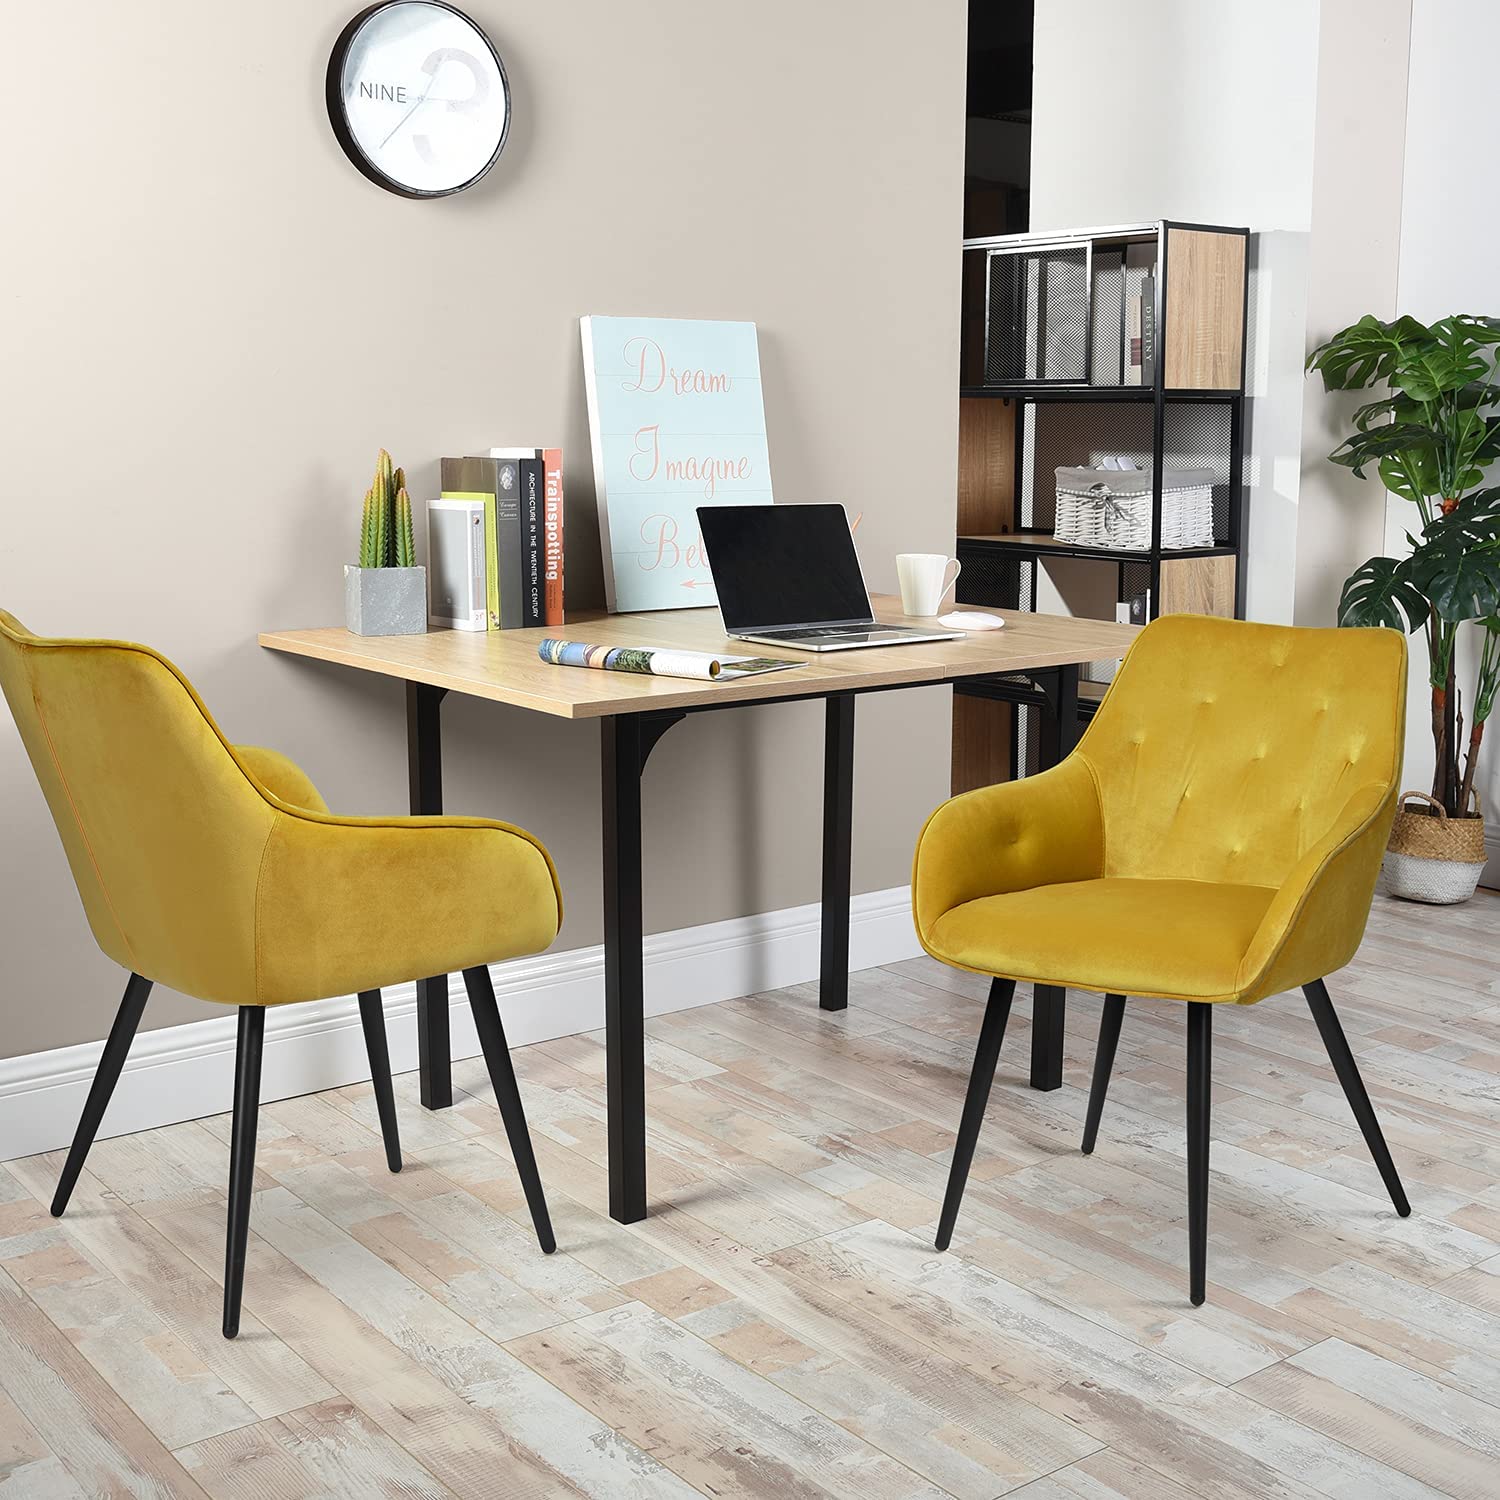 Set of 2 Scandinavian velvet chairs for dining room, office and living room - CHANDLER